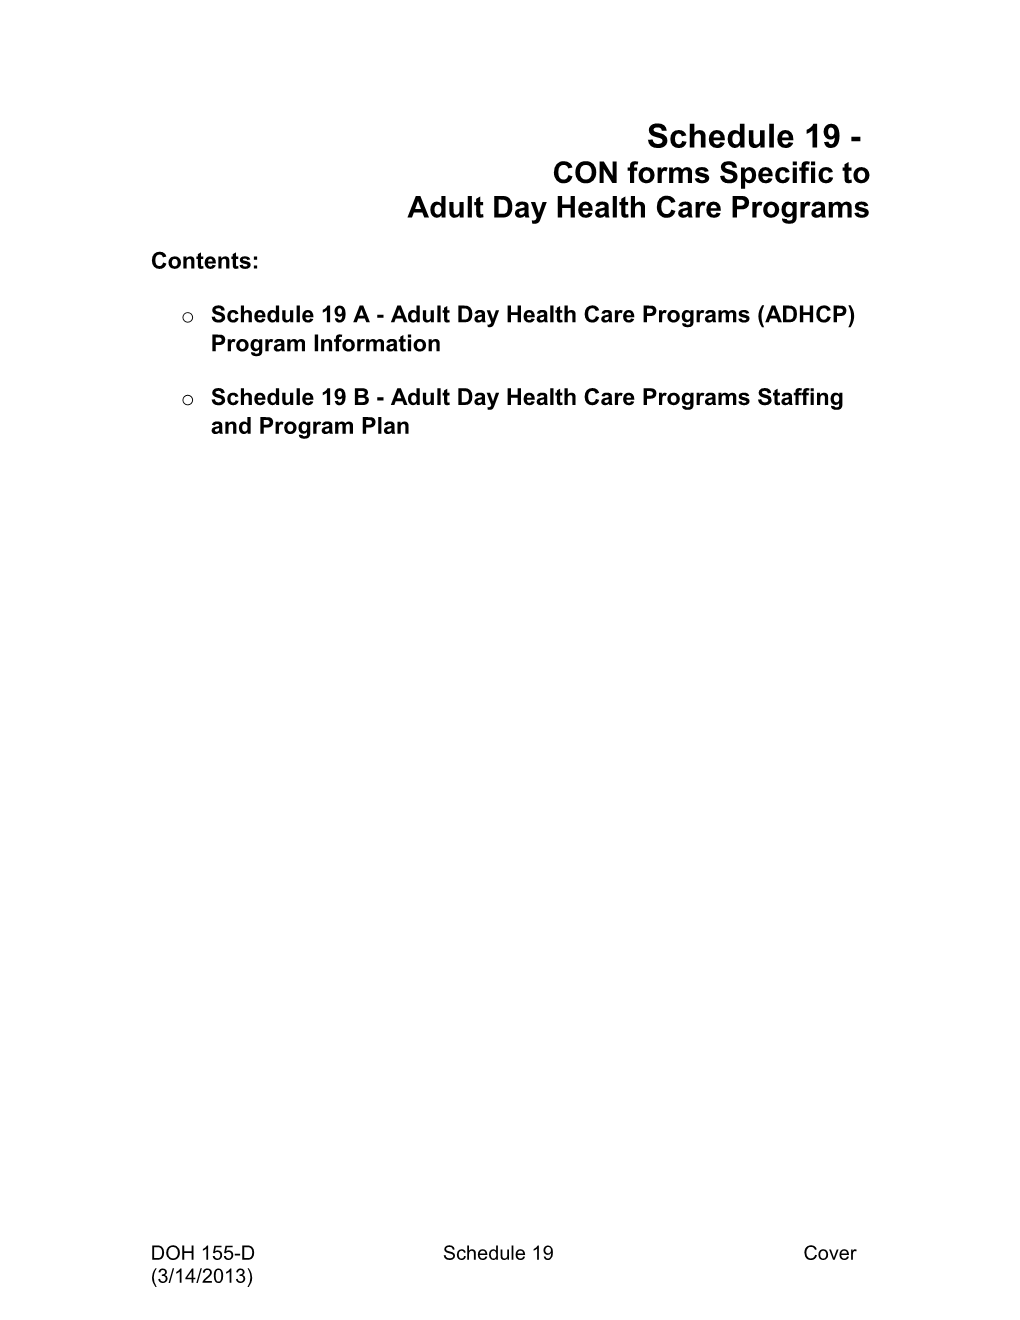 Adult Day Health Care Programs Program Information